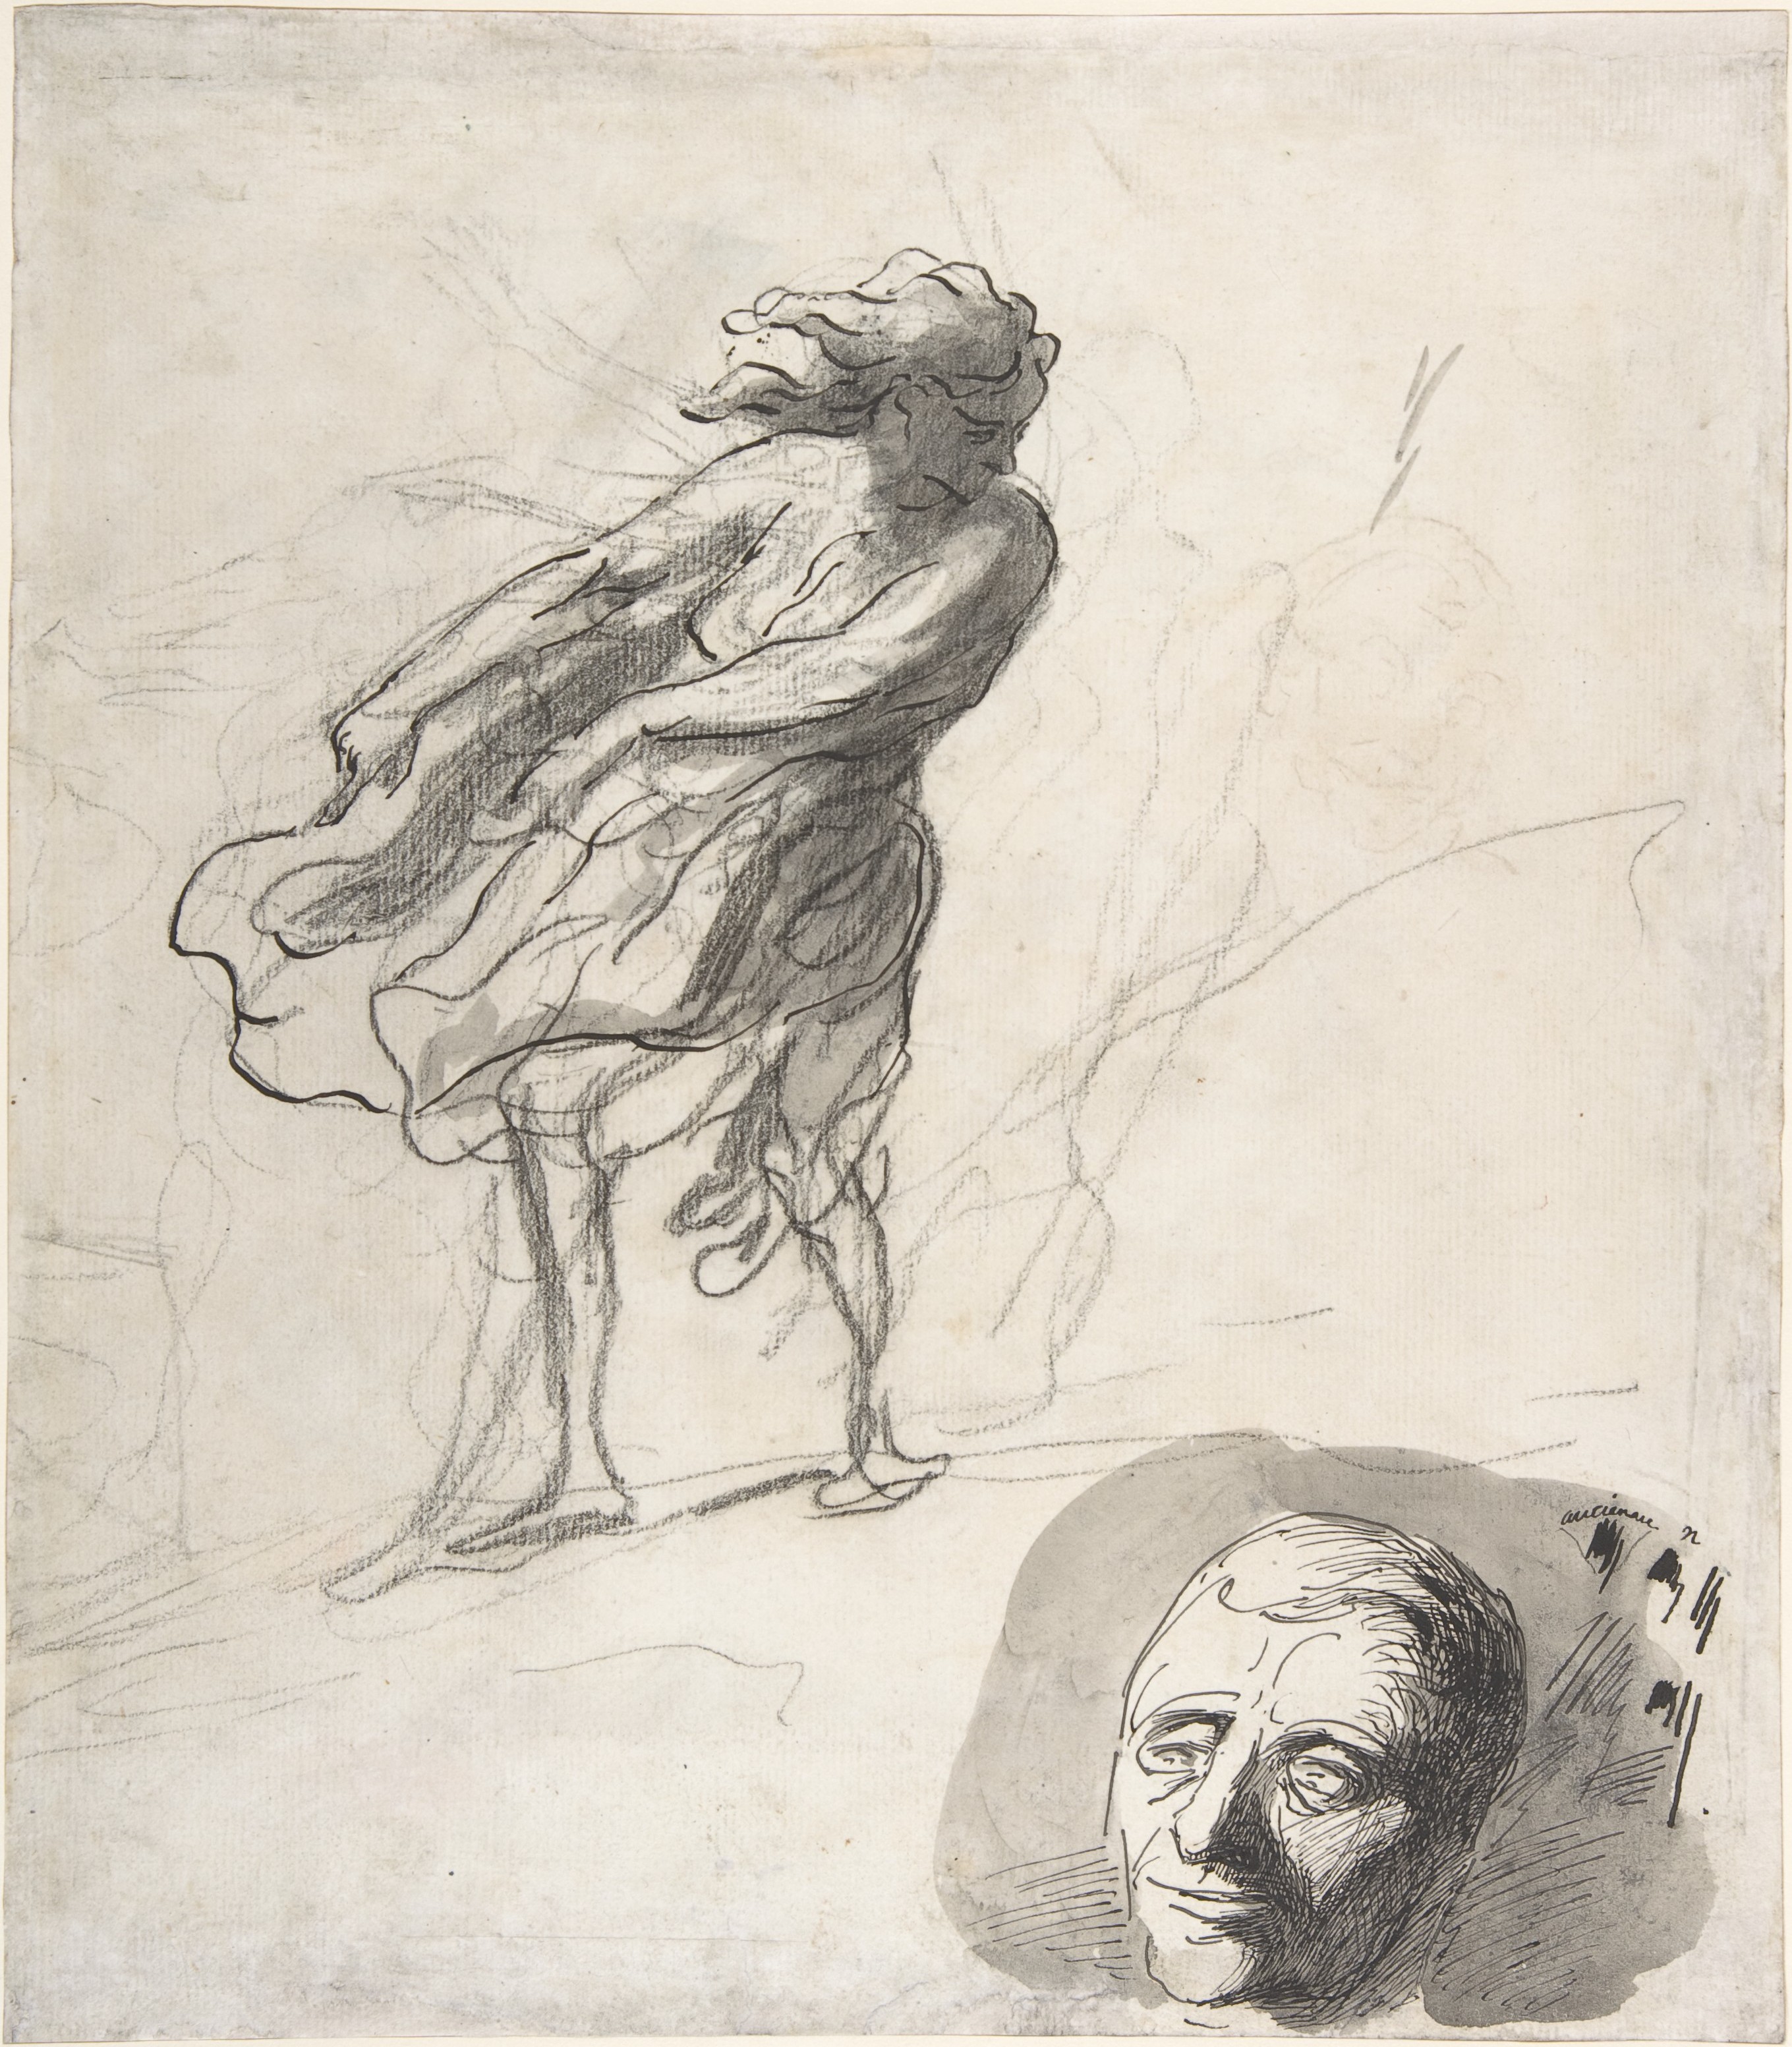 Honoré Daumier Artworks collected in Metmuseum